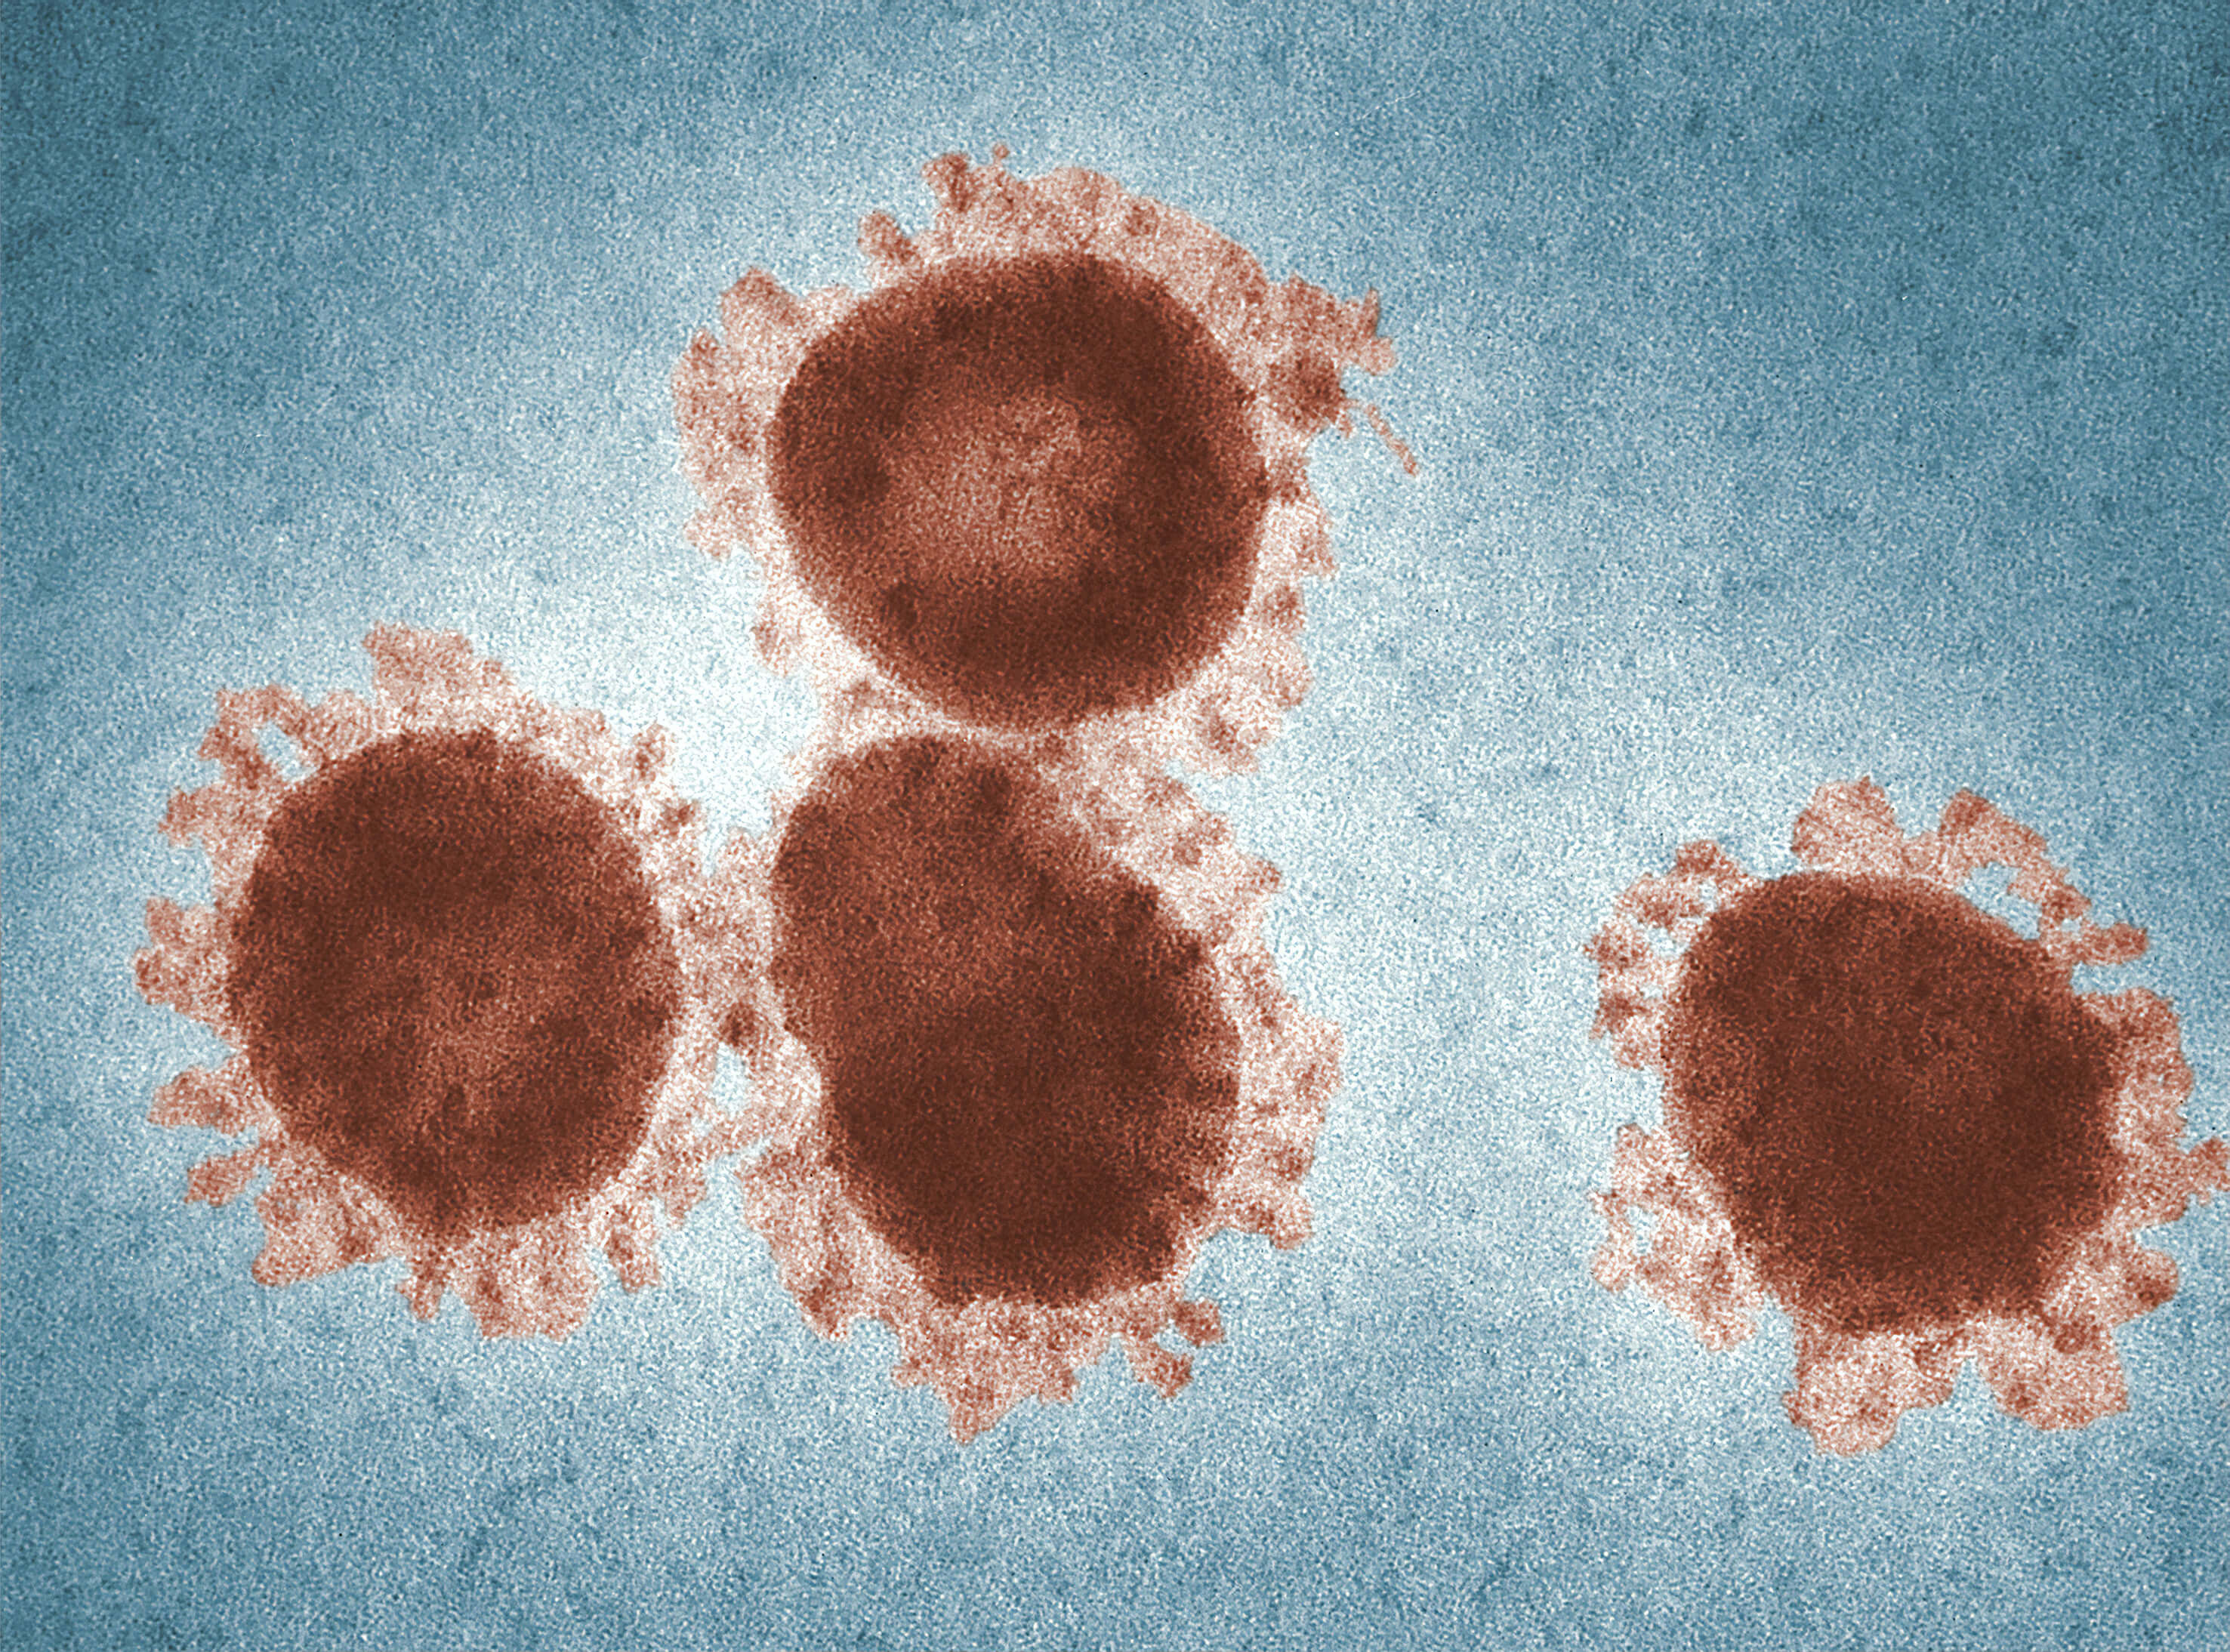 Мало коронавирус. Коронавирус SARS cov 2 под микроскопом. Коронавирус под микроскопом. Коронавирус в микроскопе. Атипичная пневмония (SARS).